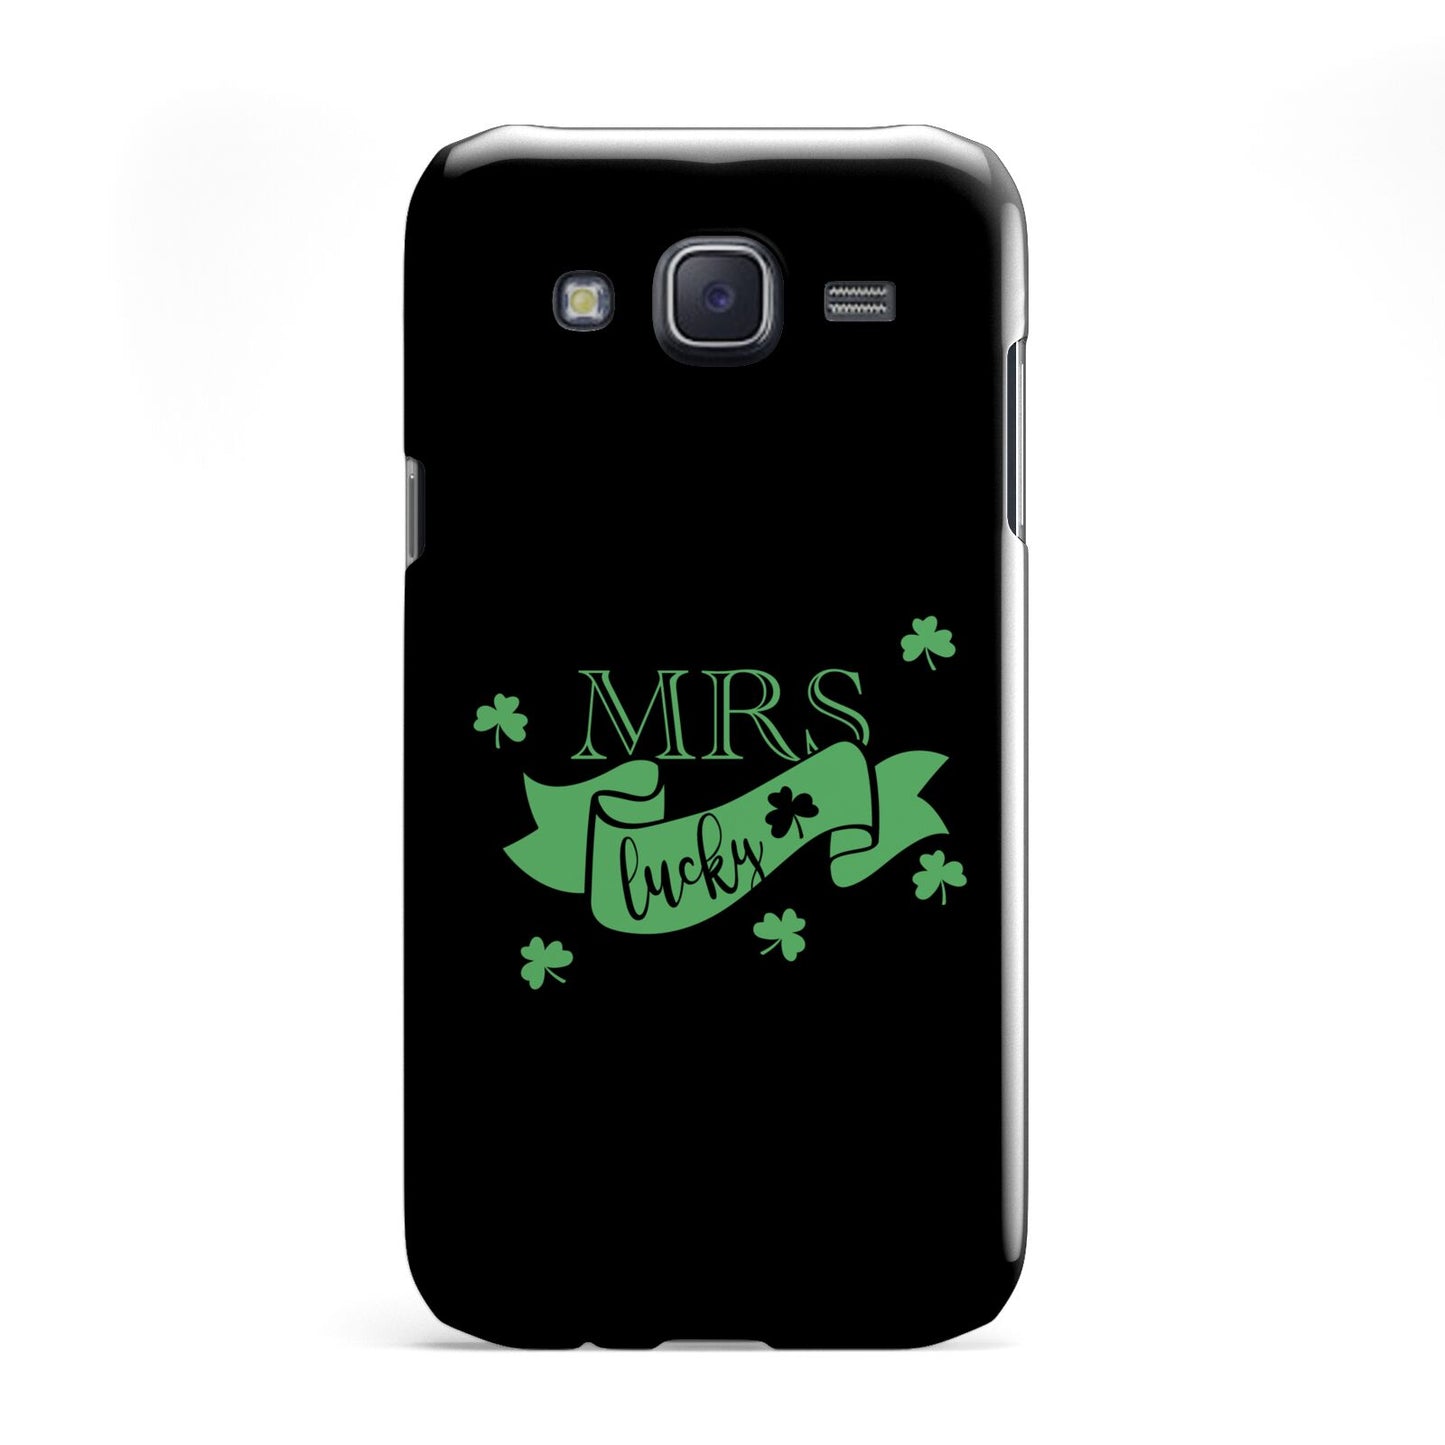 Mrs Lucky Samsung Galaxy J5 Case